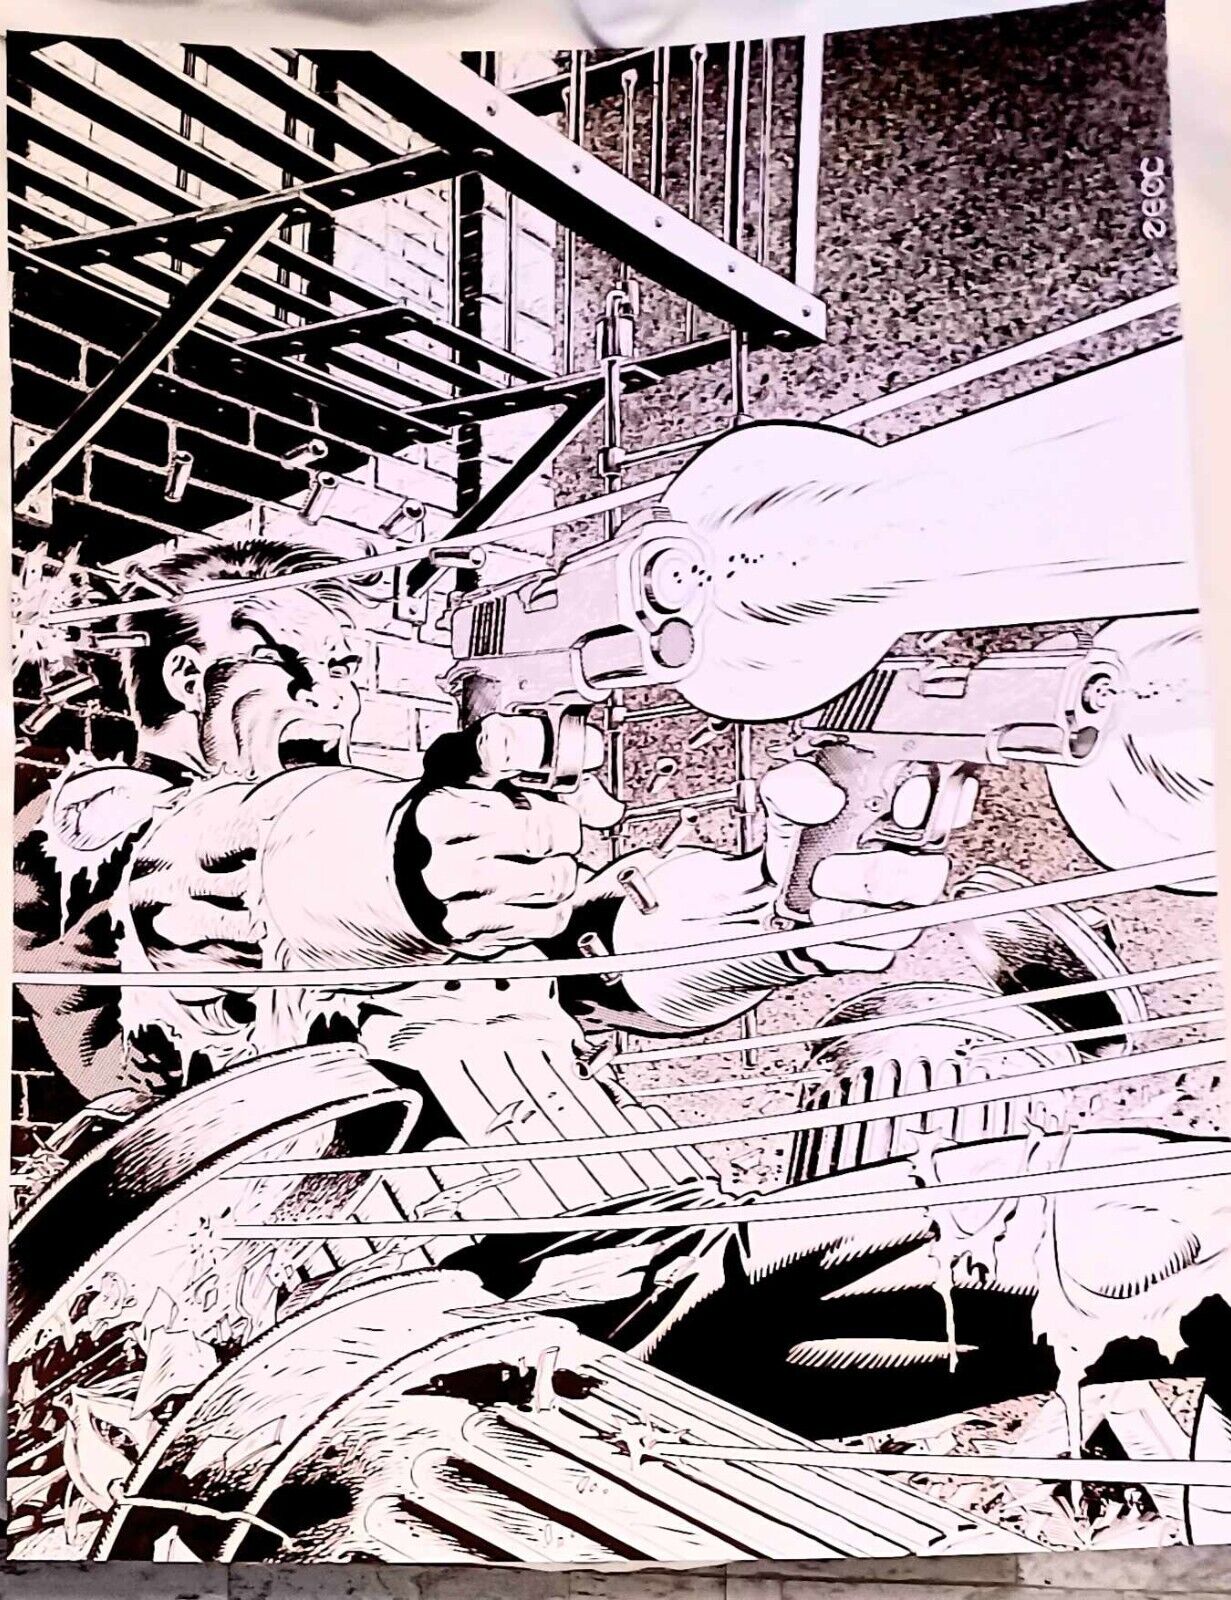 Punisher #1 by Mike Zeck Large 17x23 Original Art Poster Print Marvel Comics